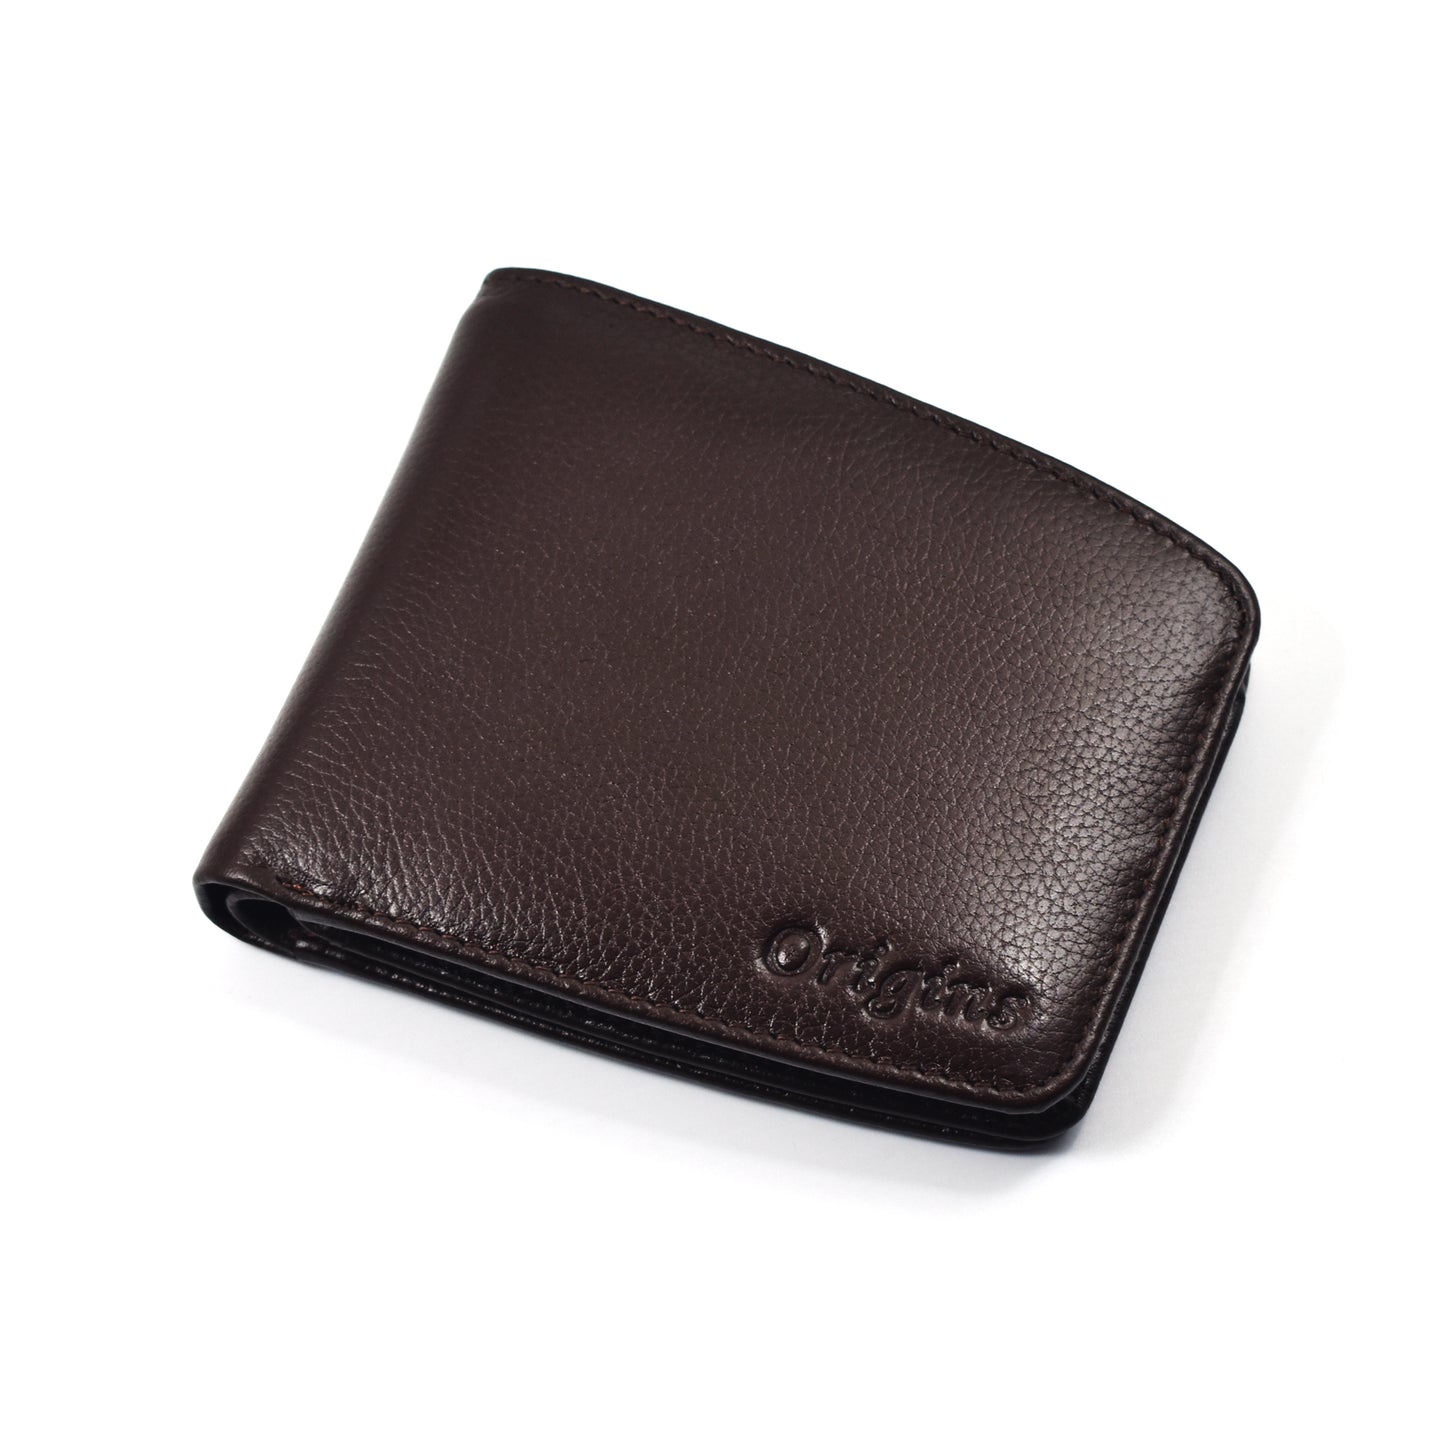 Pocket Size Wallet | Original Leather | Premium Quality | ORGN Wallet 35